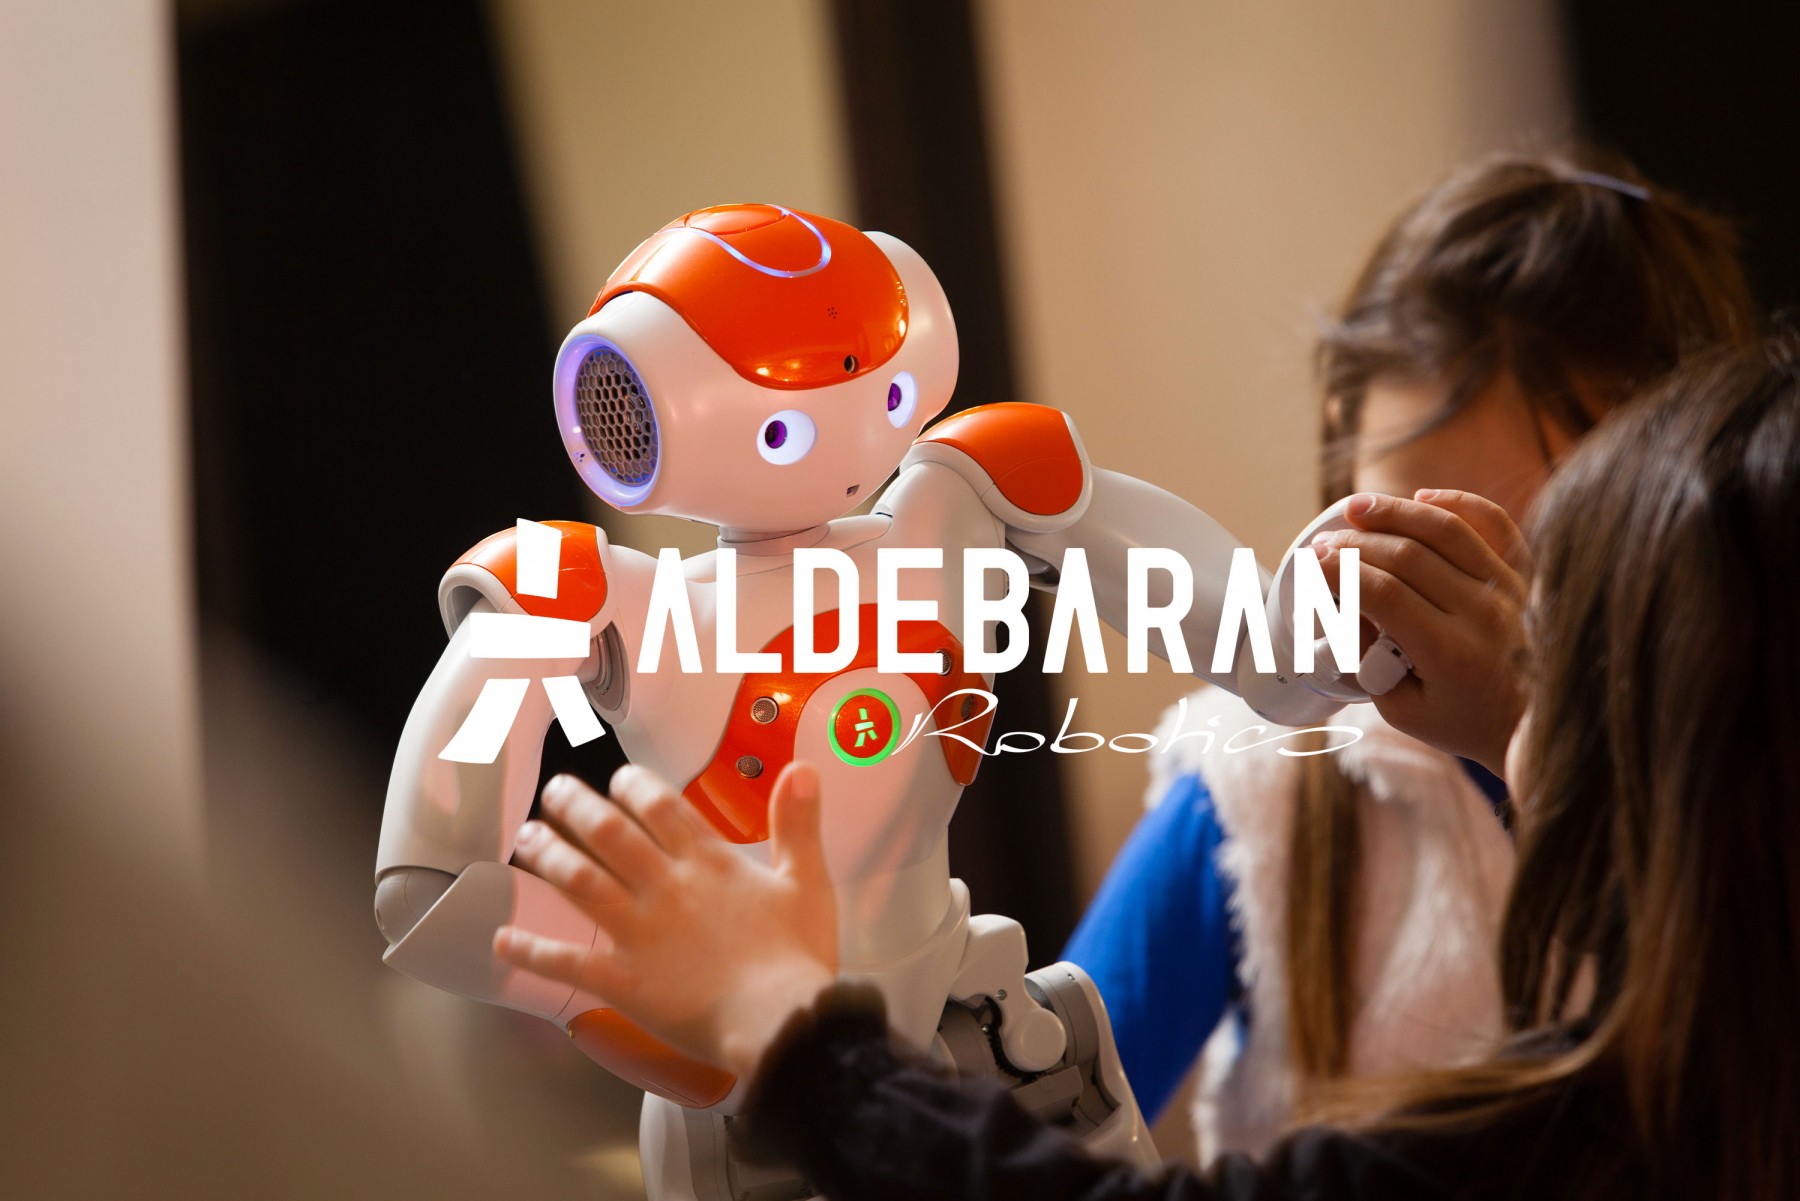 Photo credit: Aldebaran Robotics